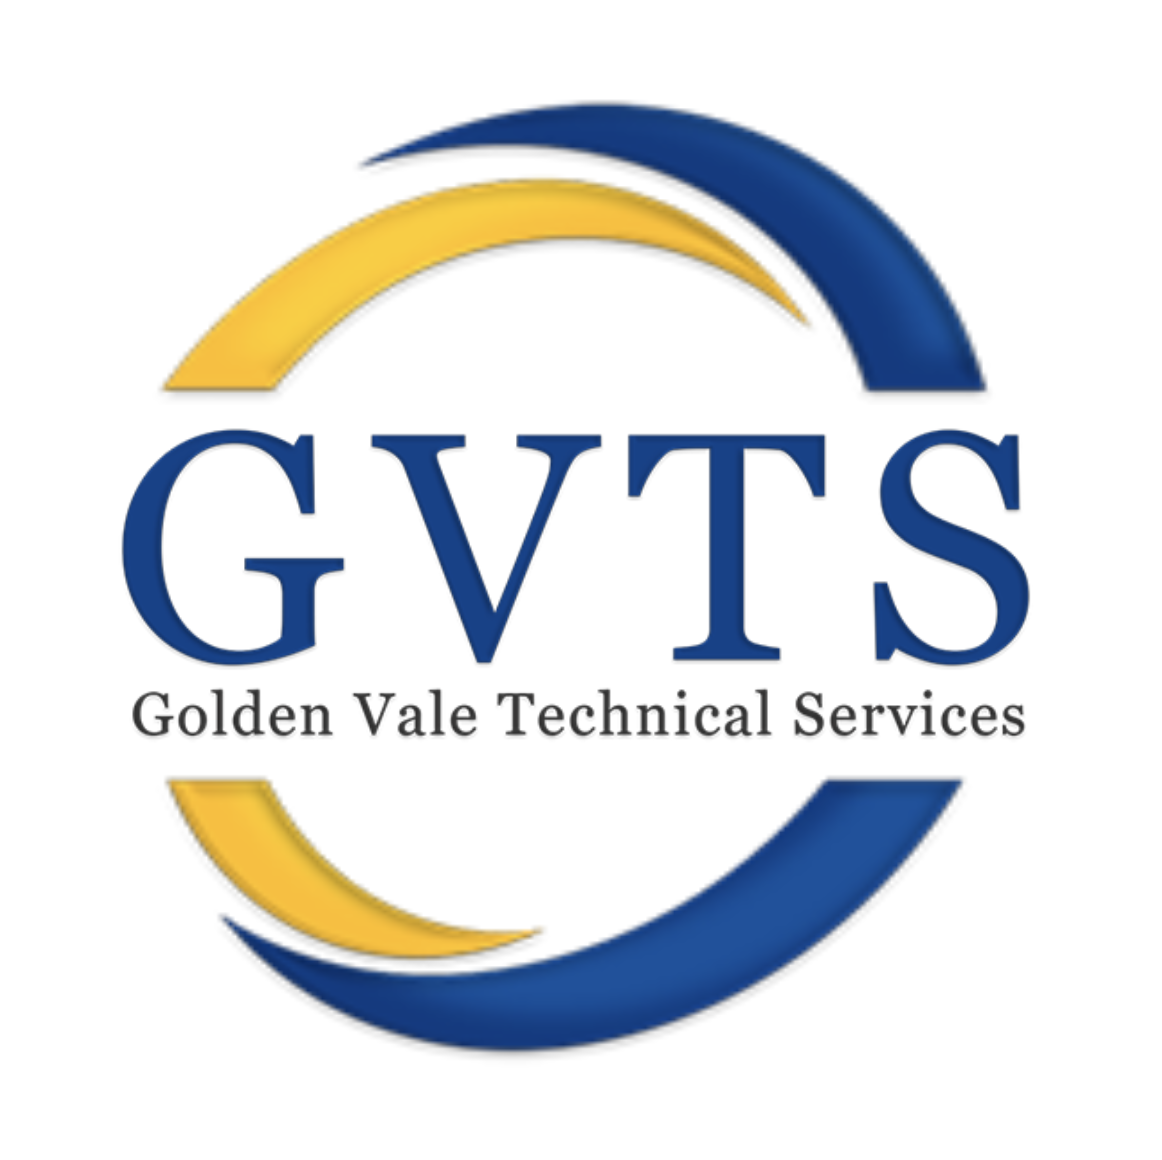 Golden Vale Technical Services